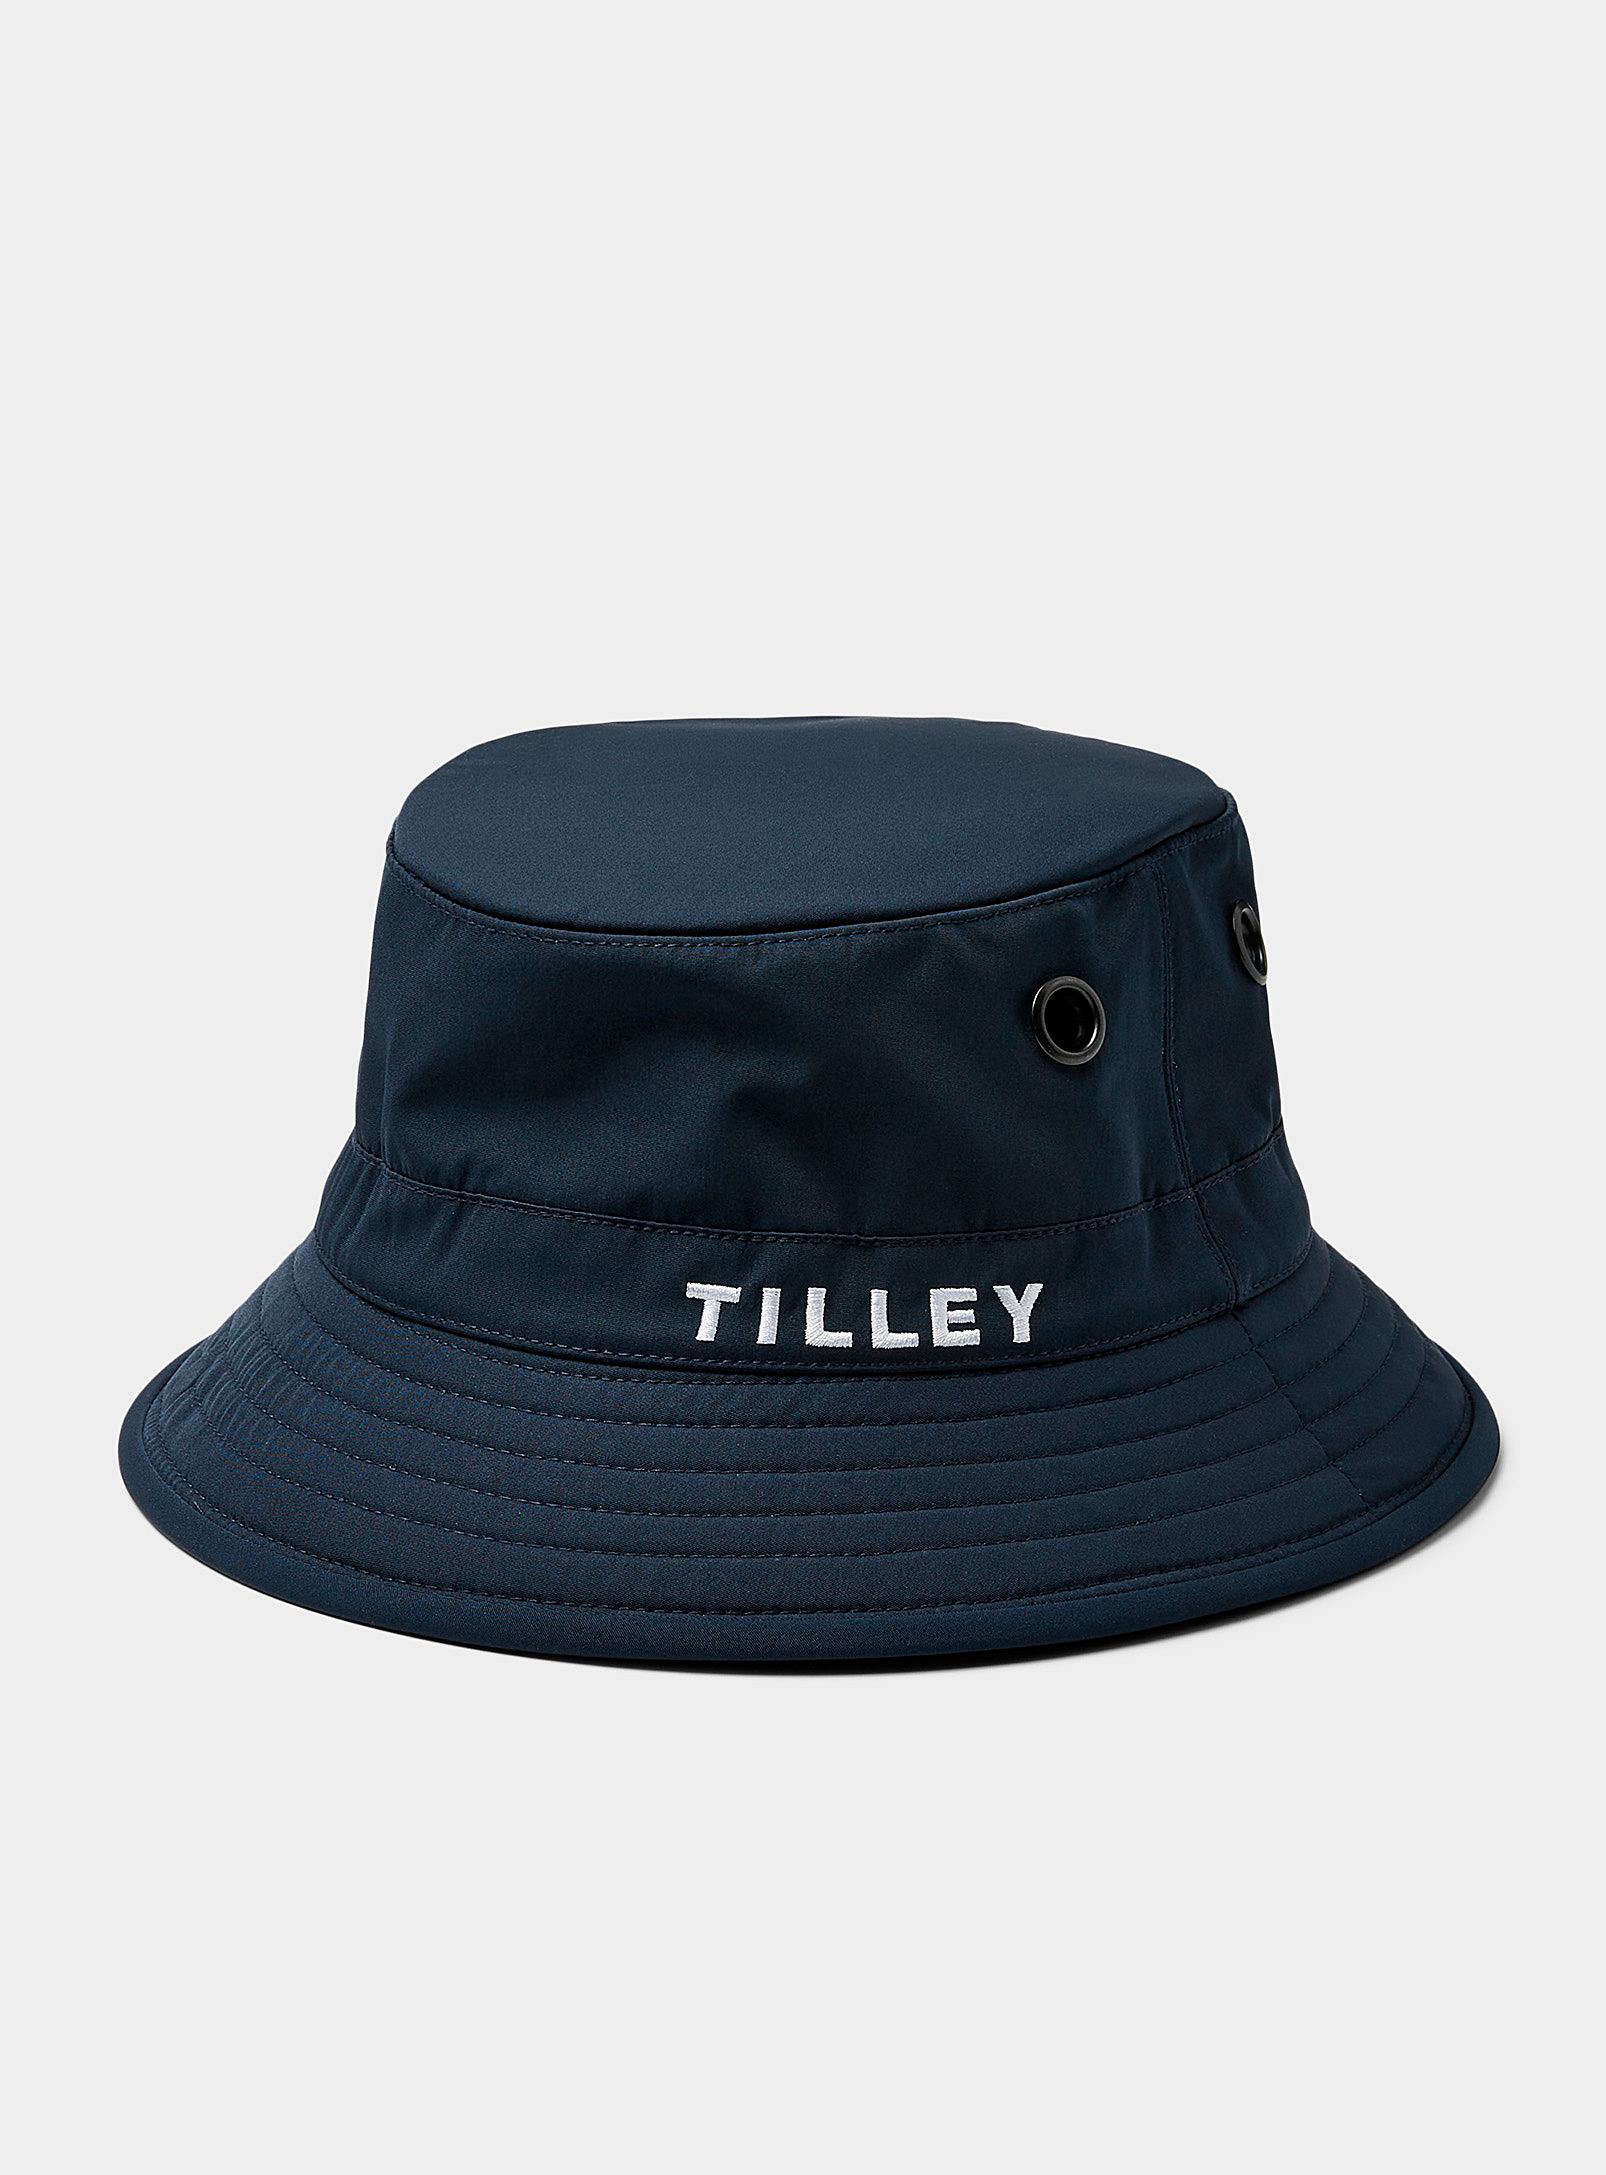 Tilley - Men's Embroidered logo bucket hat